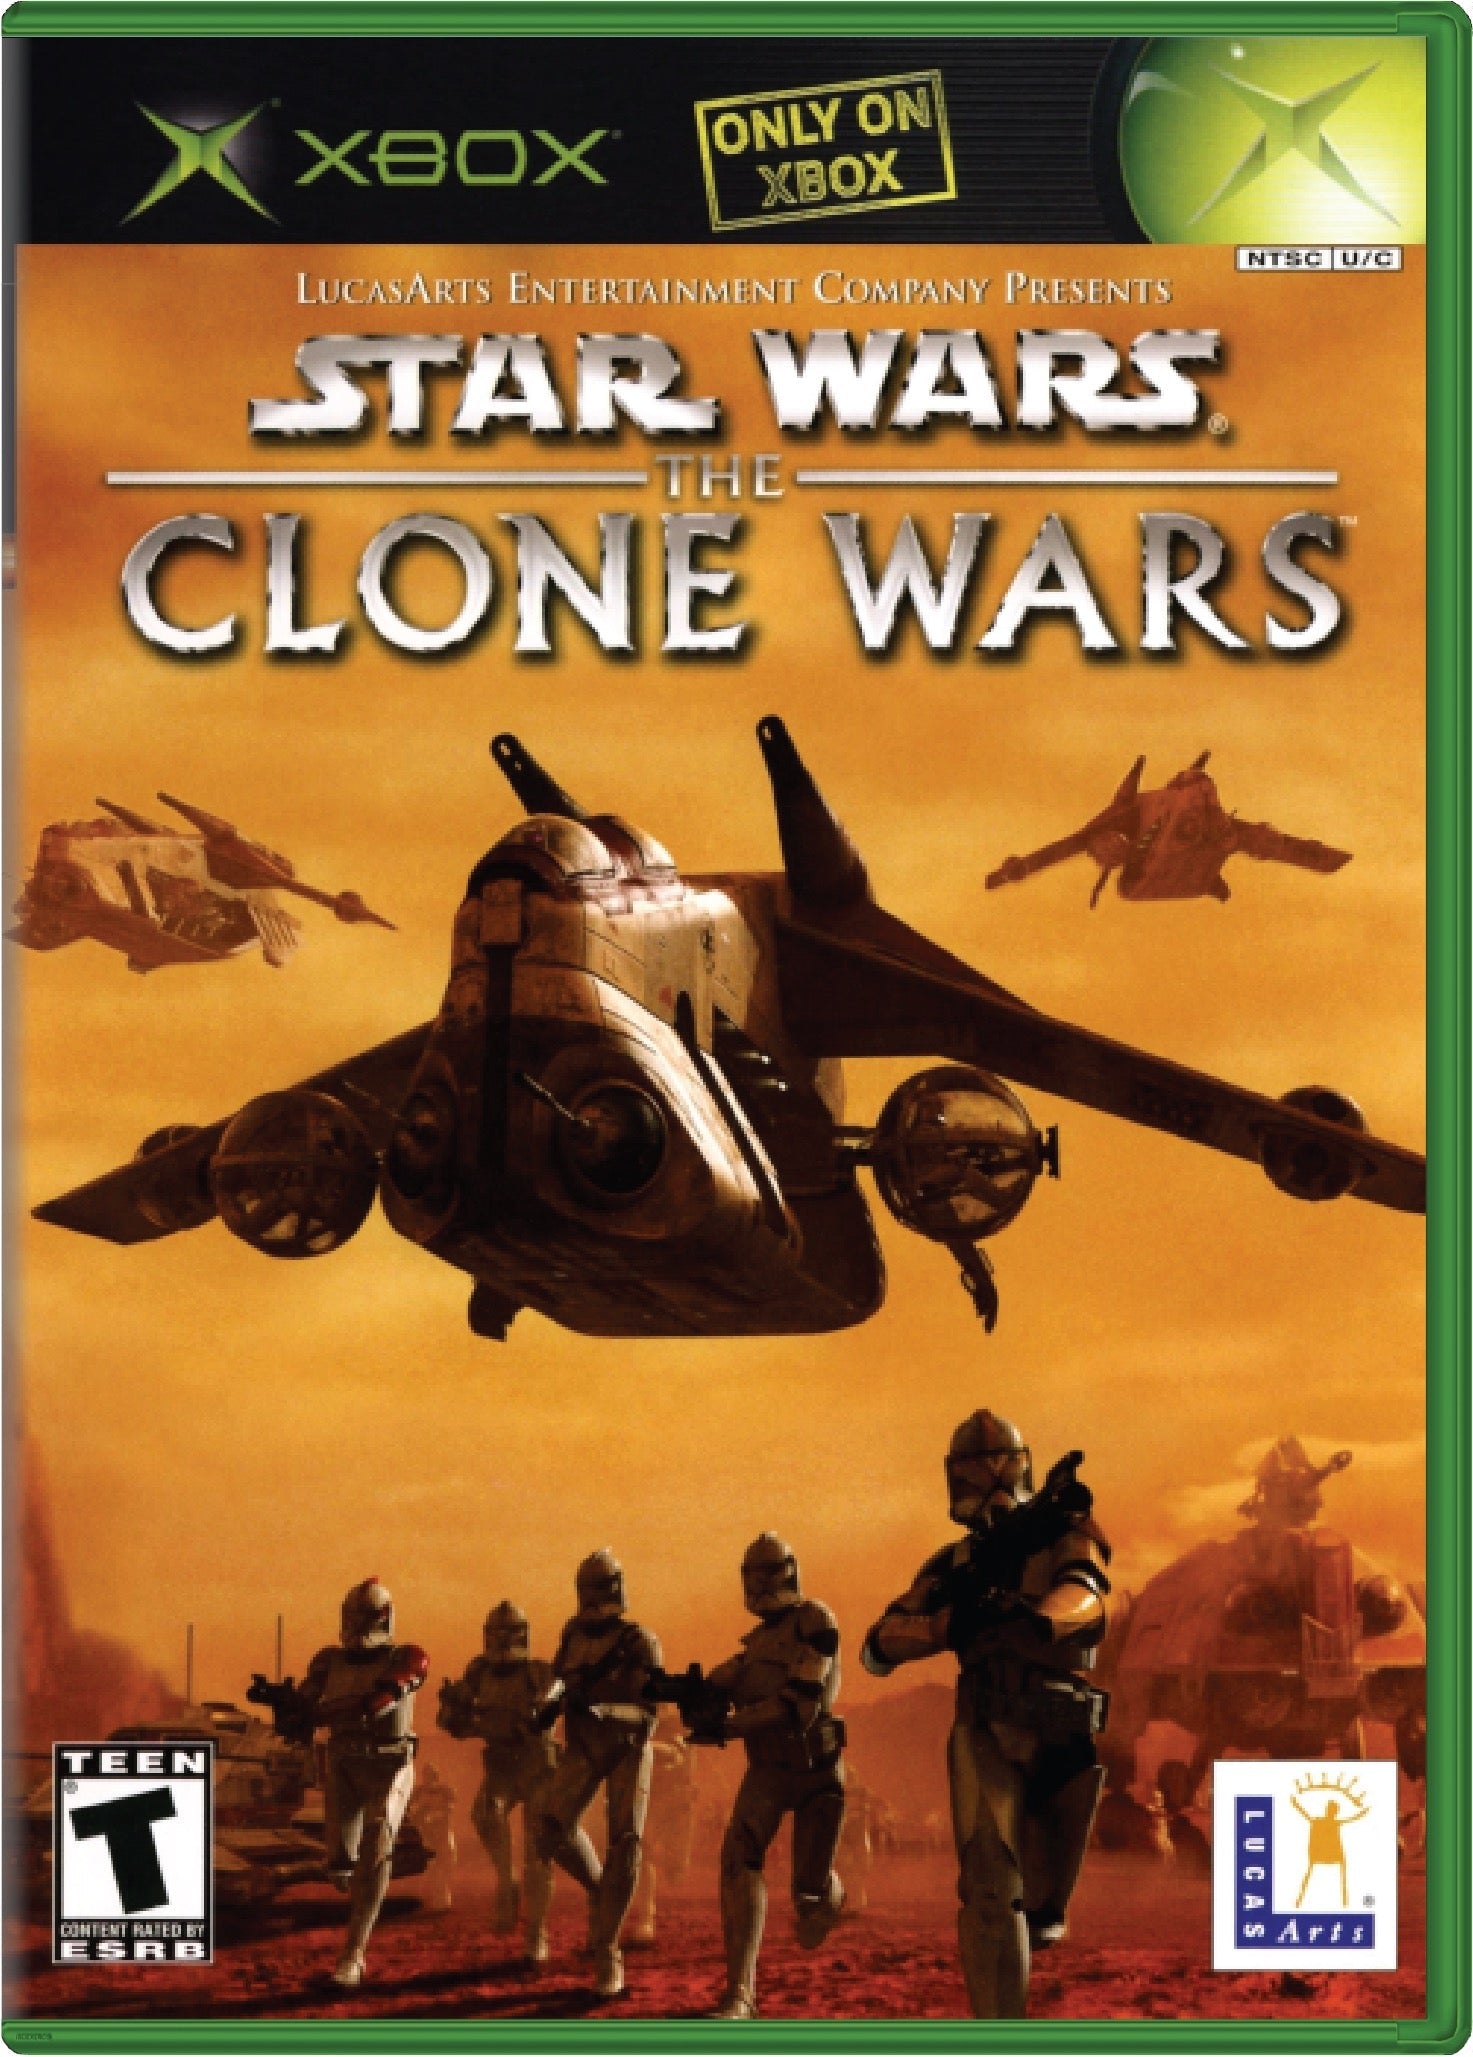 Star Wars Clone Wars Cover Art